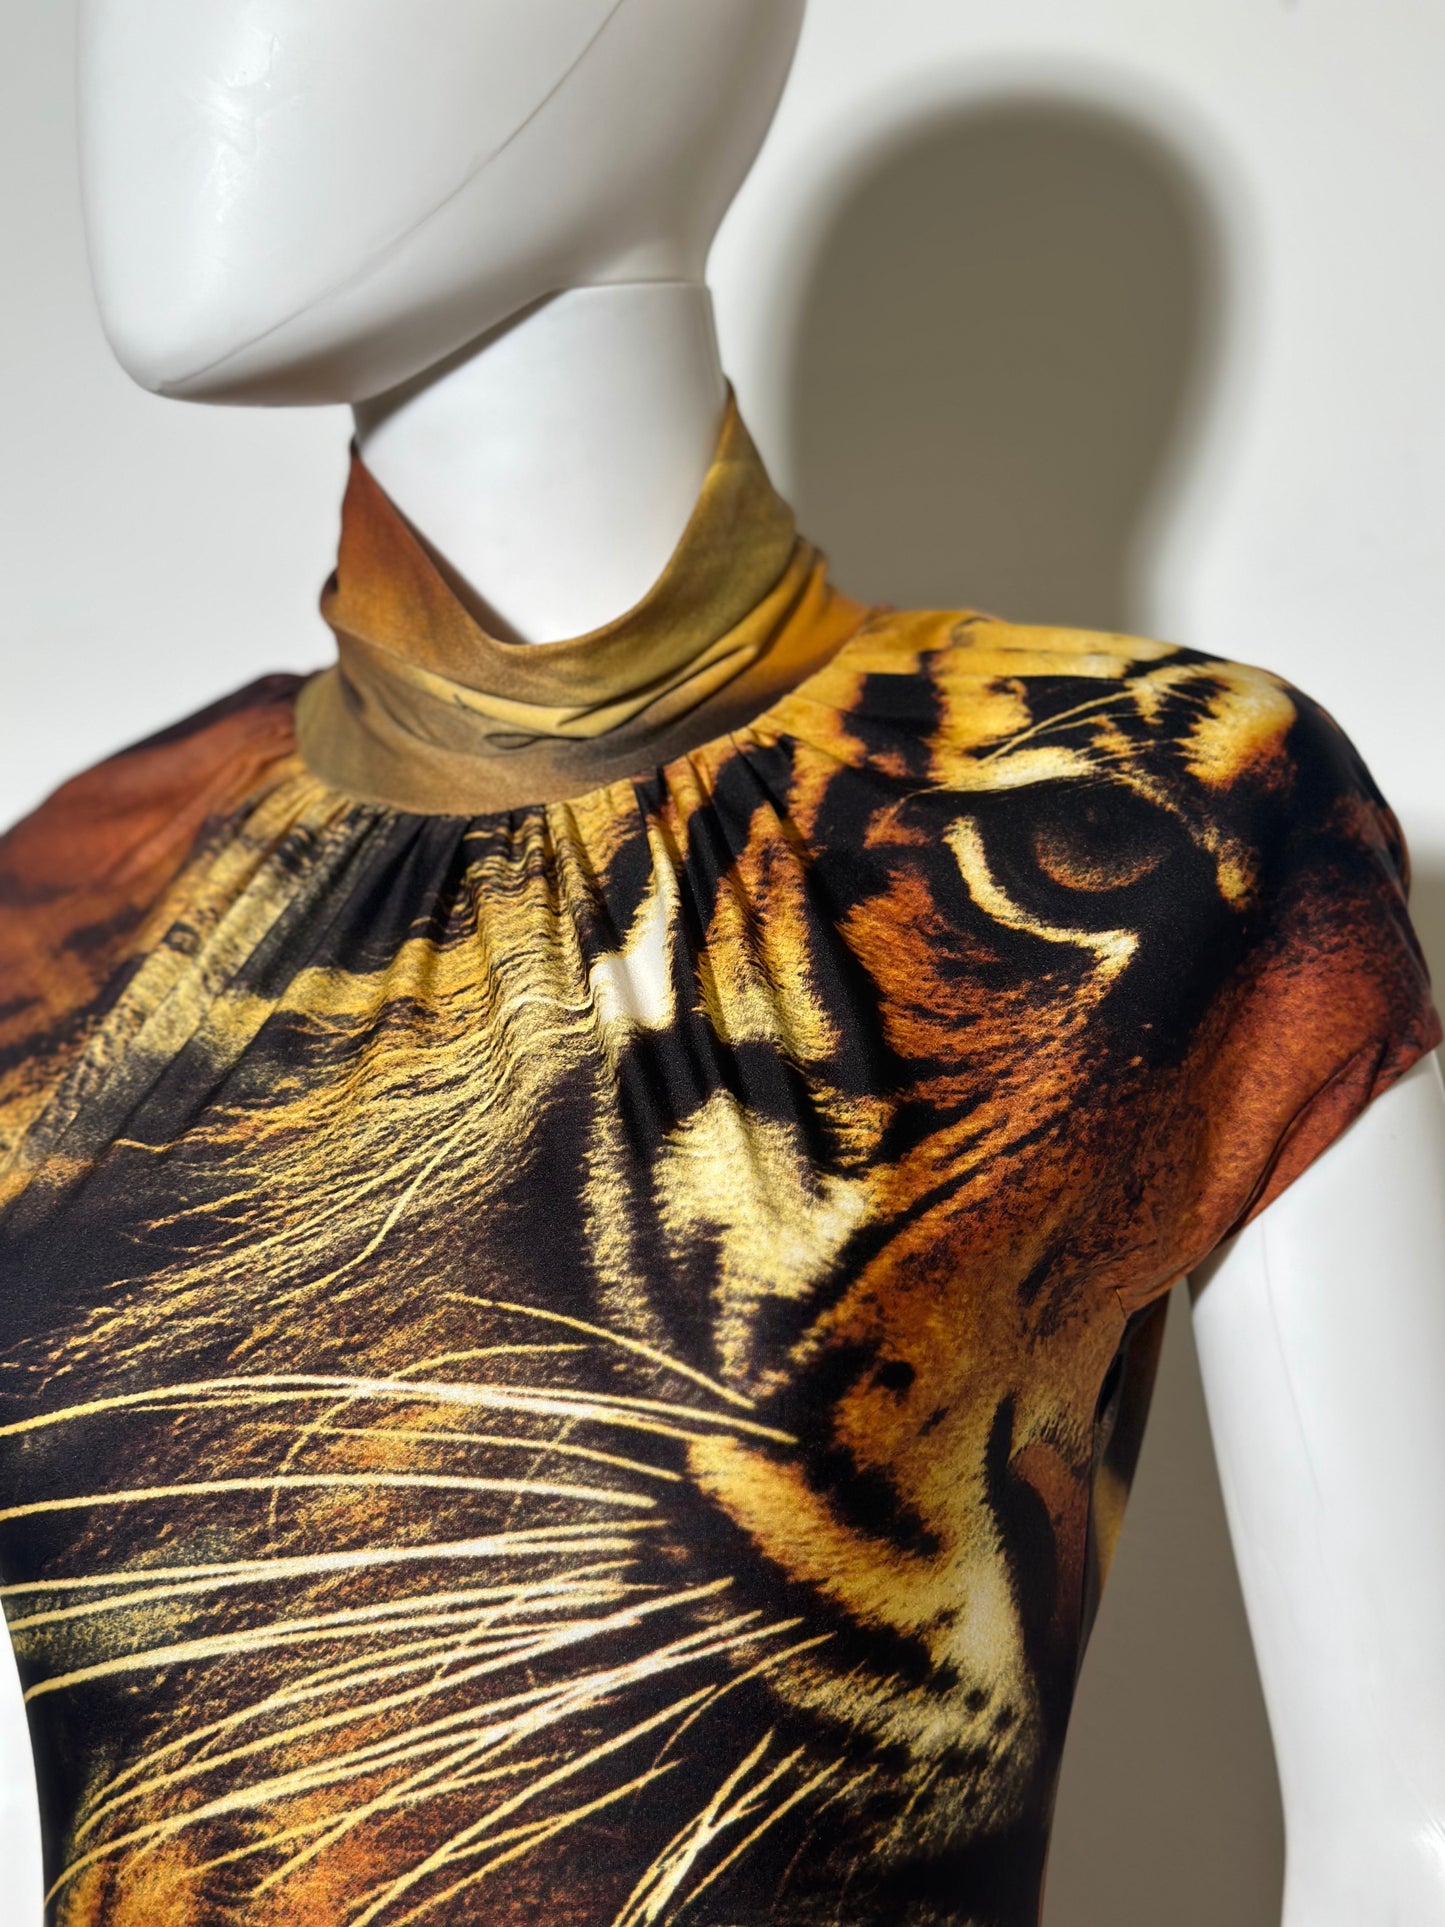 Roberto Cavalli FW 2000 Tiger Print Dress